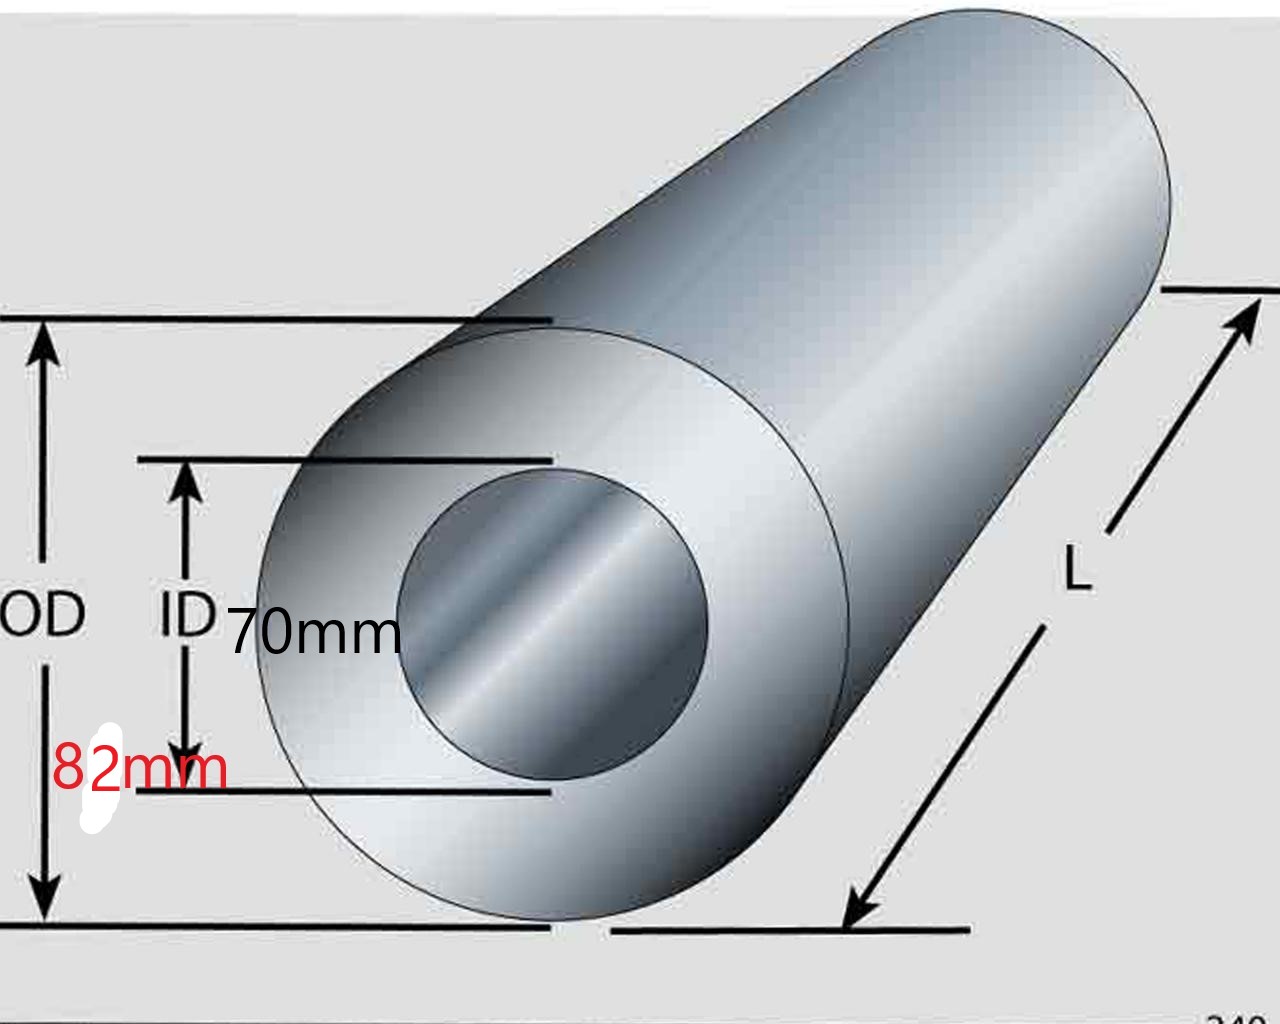  Jack Cylinder Id70 x Od82mm image 1